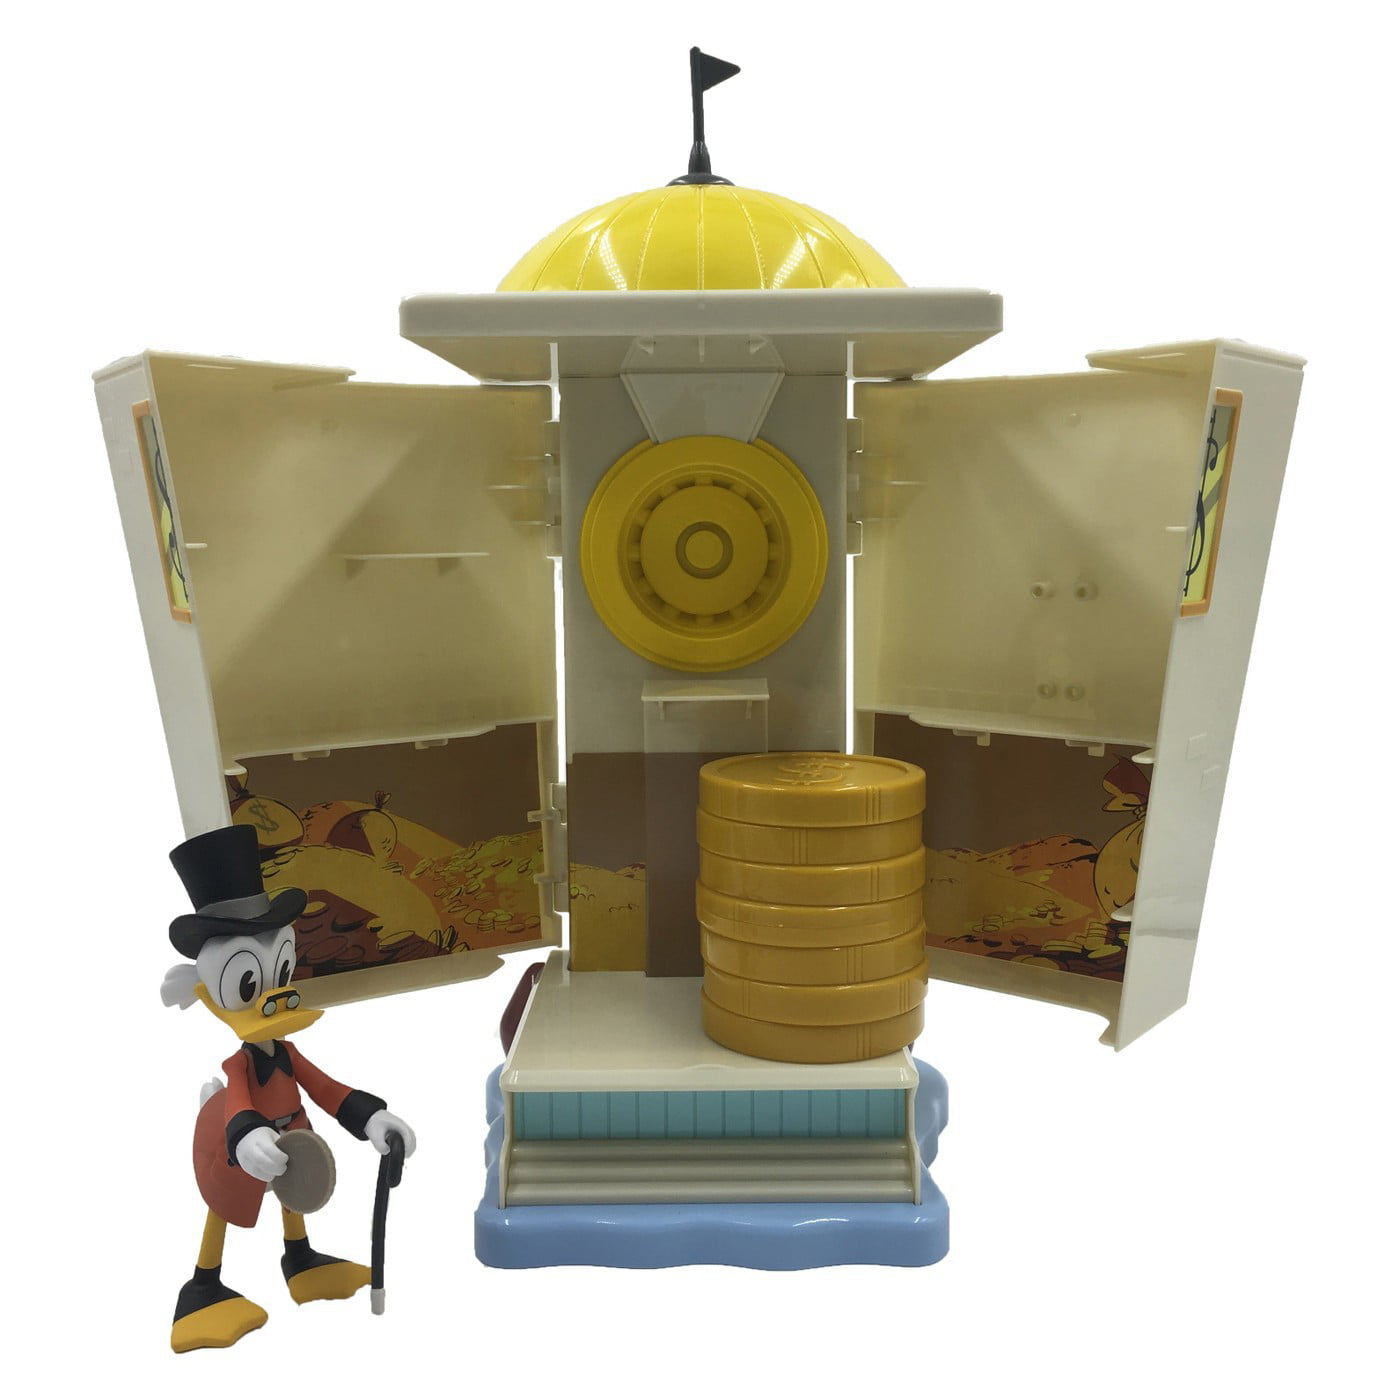 Details about   Disney Duck Tales Display Storage Vault Playset Uncle Scrooge McDuck Money Bin 